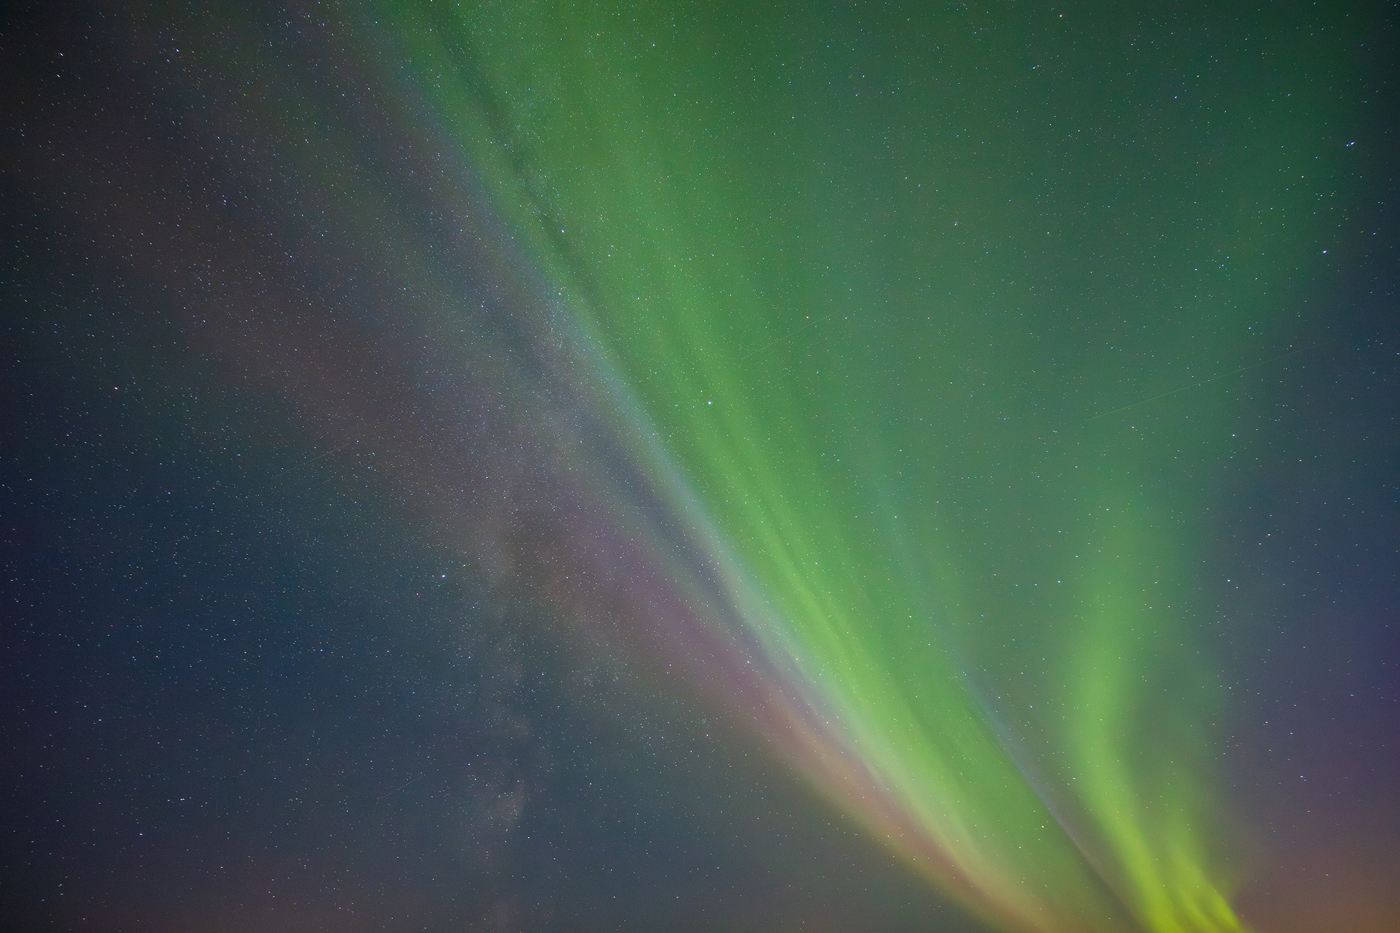  a green and purple aurora borealis